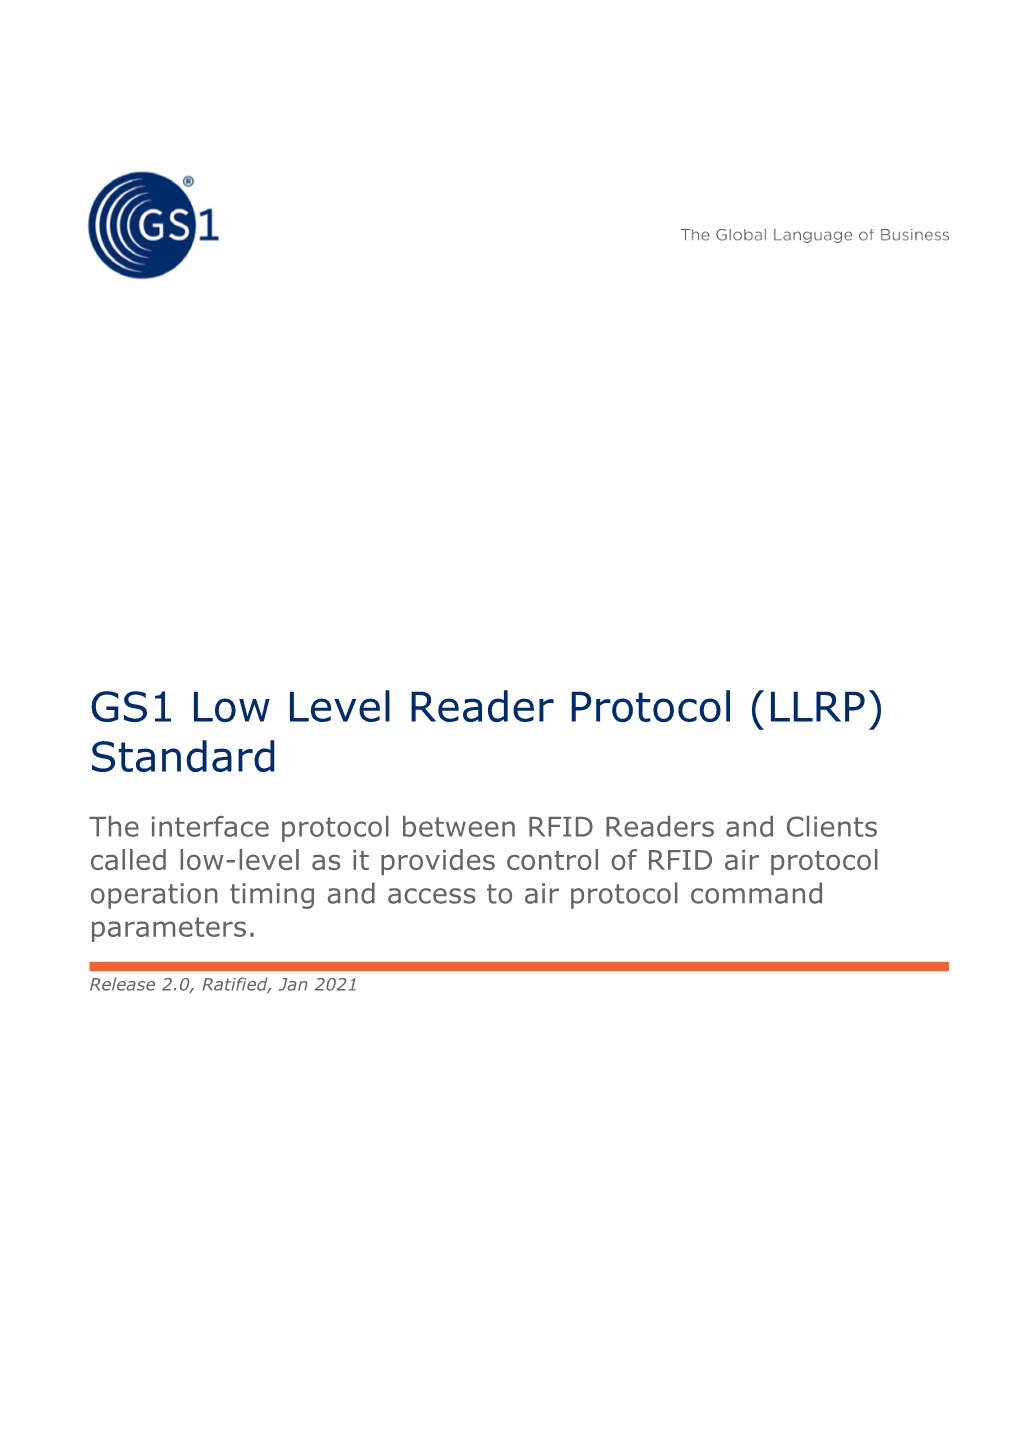 GS1 Low Level Reader Protocol (LLRP) Standard